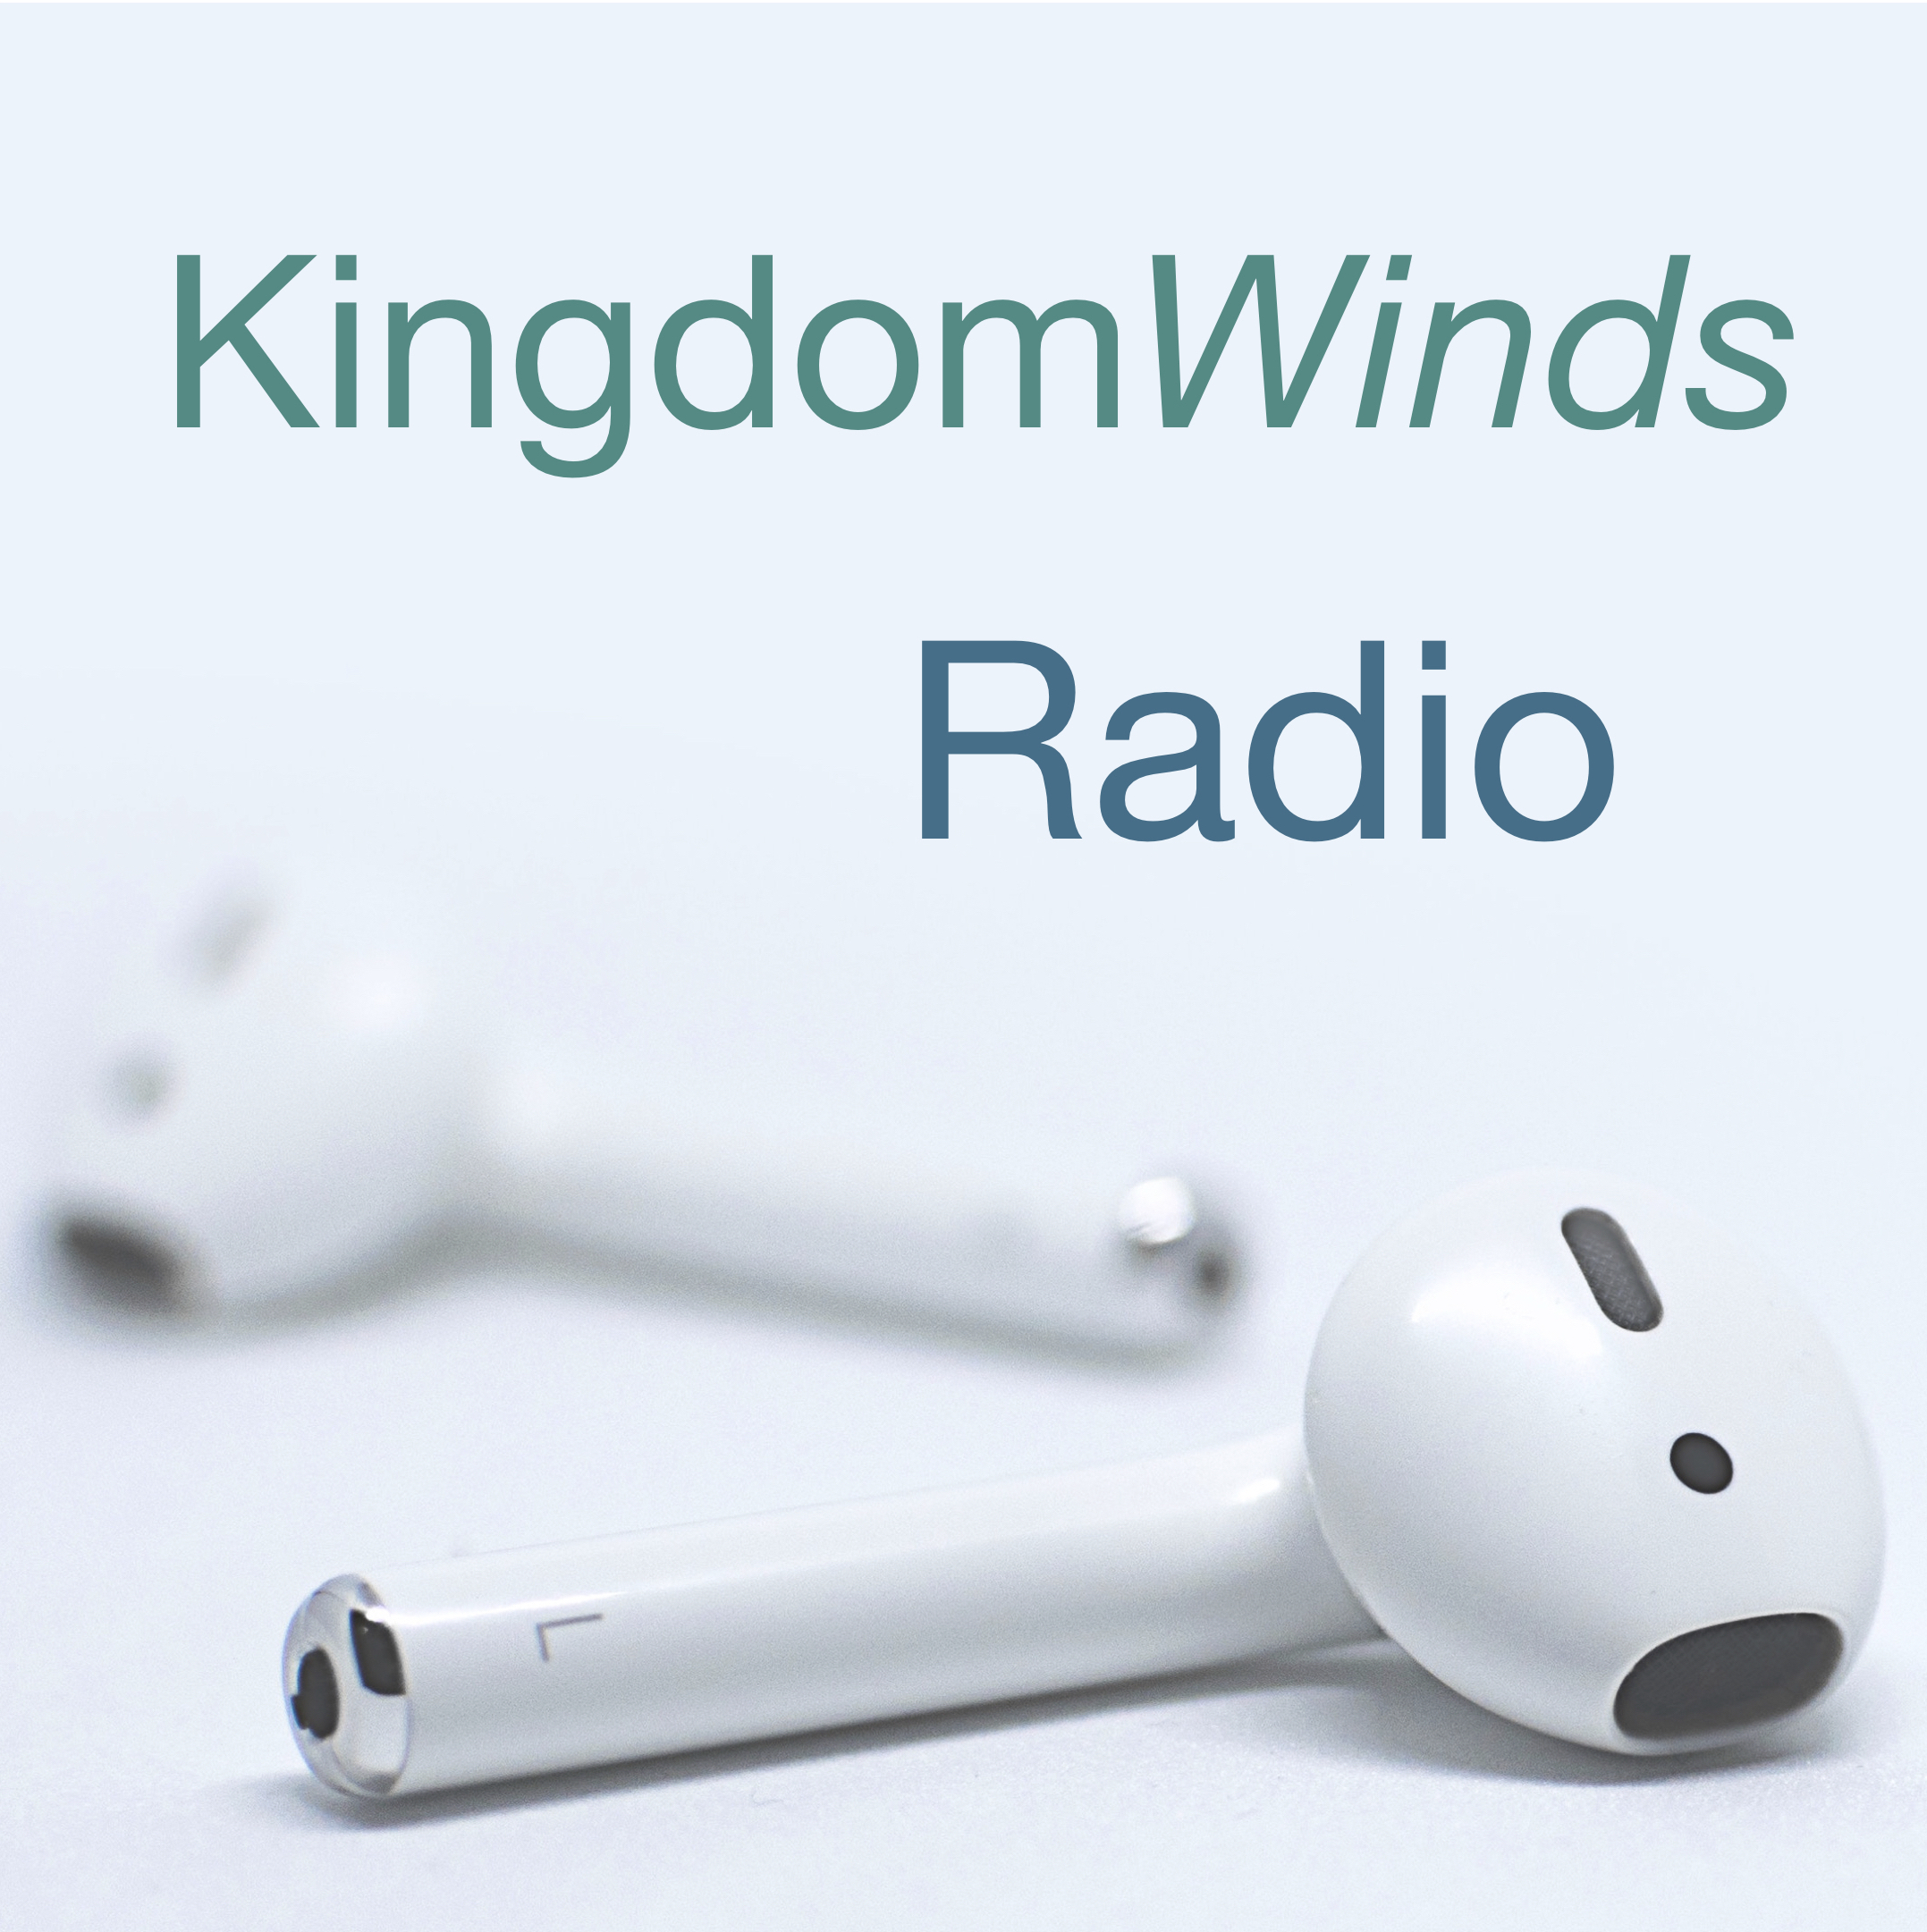 Kingdom Winds